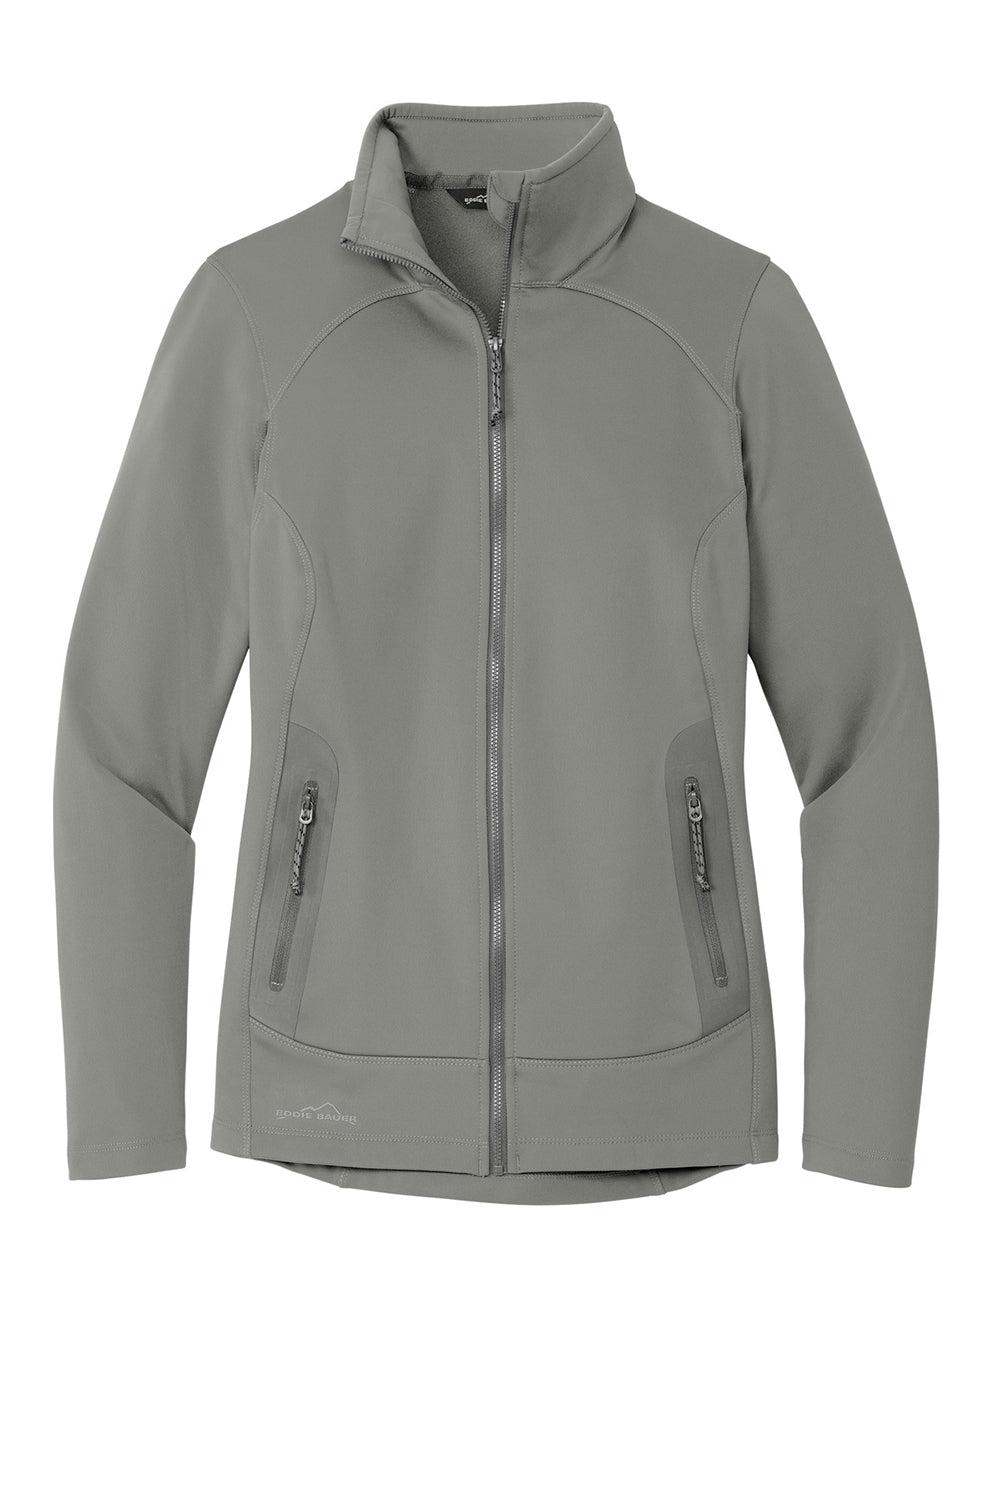 Eddie Bauer EB241 Womens Highpoint Pill Resistant Fleece Full Zip Jacket Metal Grey Flat Front